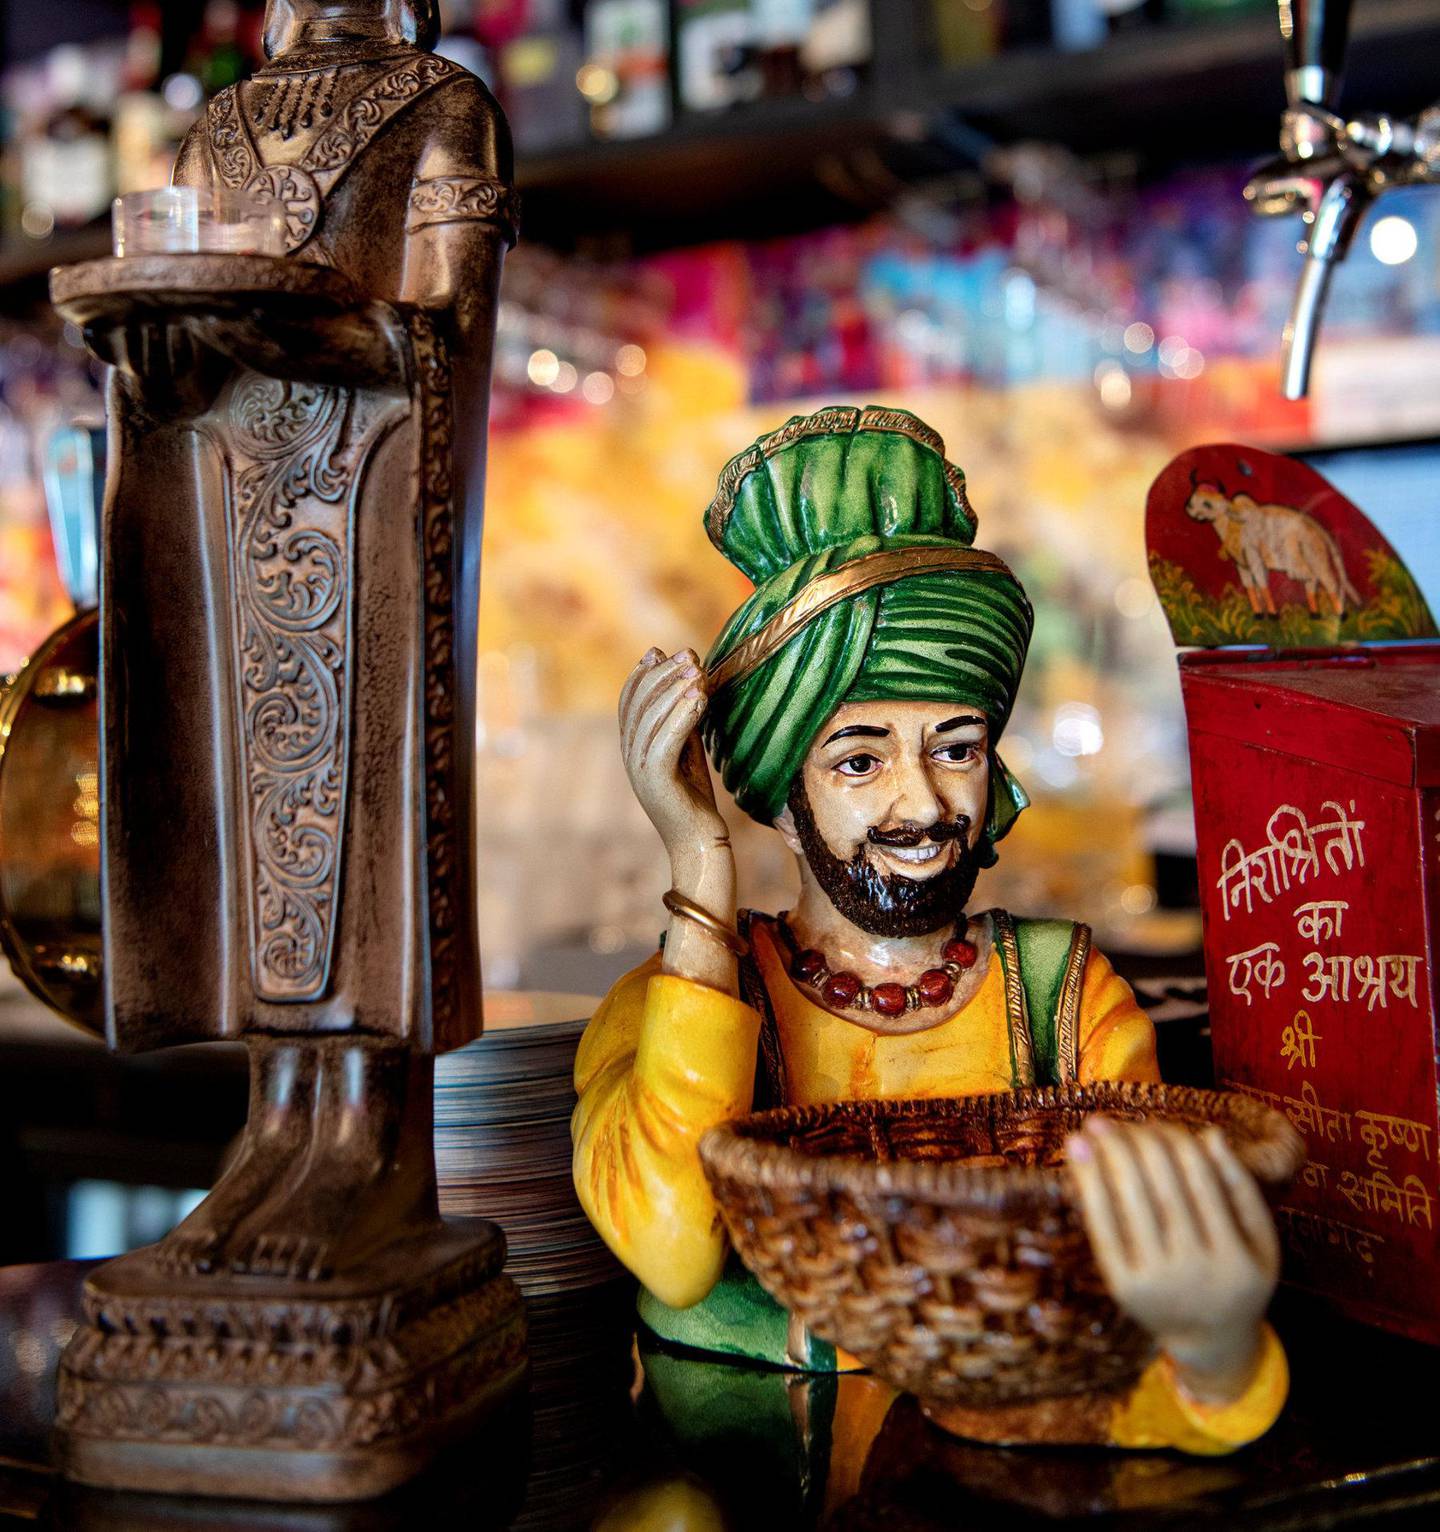 Theka. Indian street food & bar. Restaurant ved Olaf Ryes Plass. Byløvene